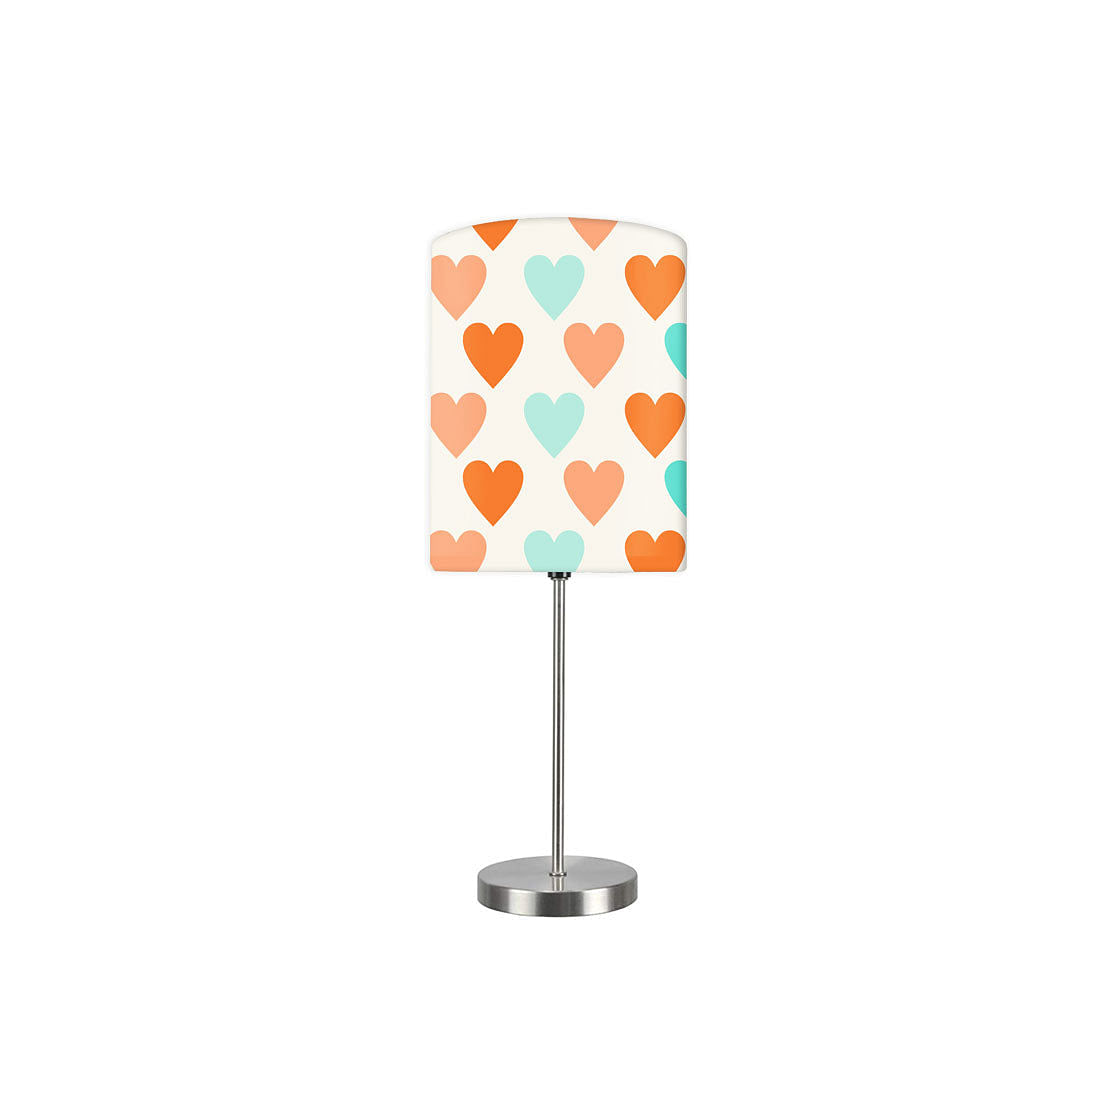 Night Light Lamps for Kids Bedroom - Orange Heart 0016 Nutcase